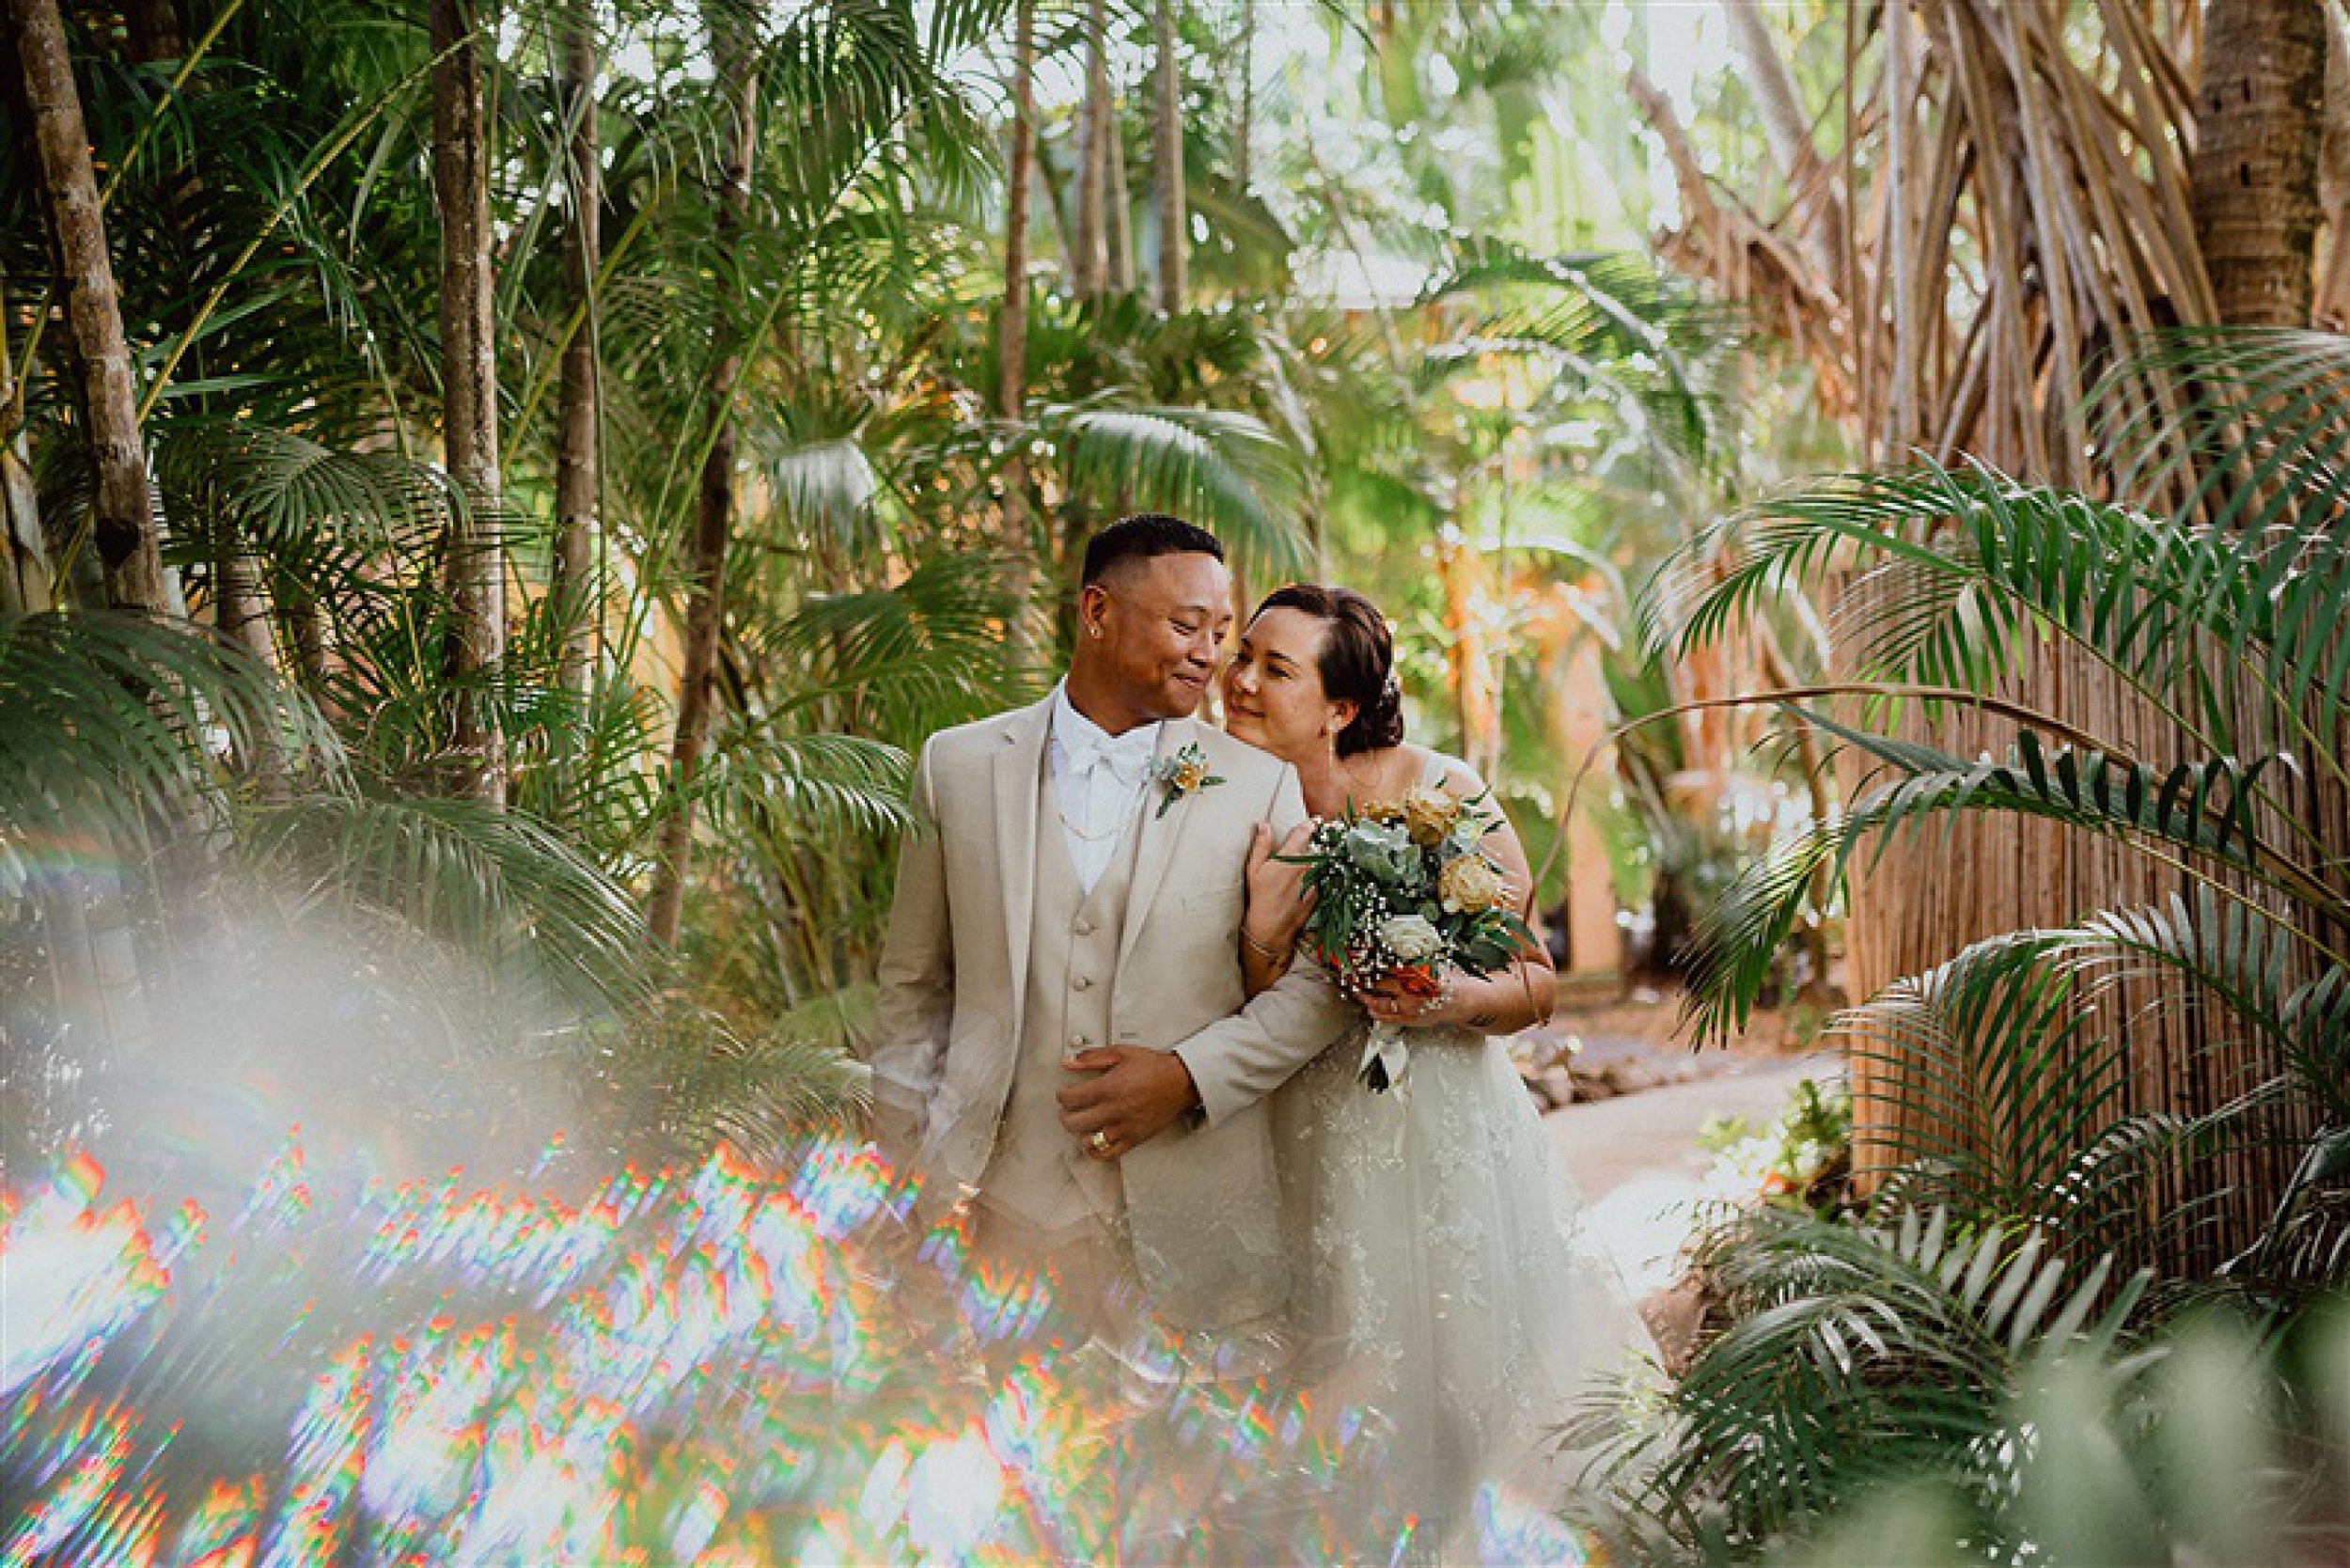 tropical wedding inspiration